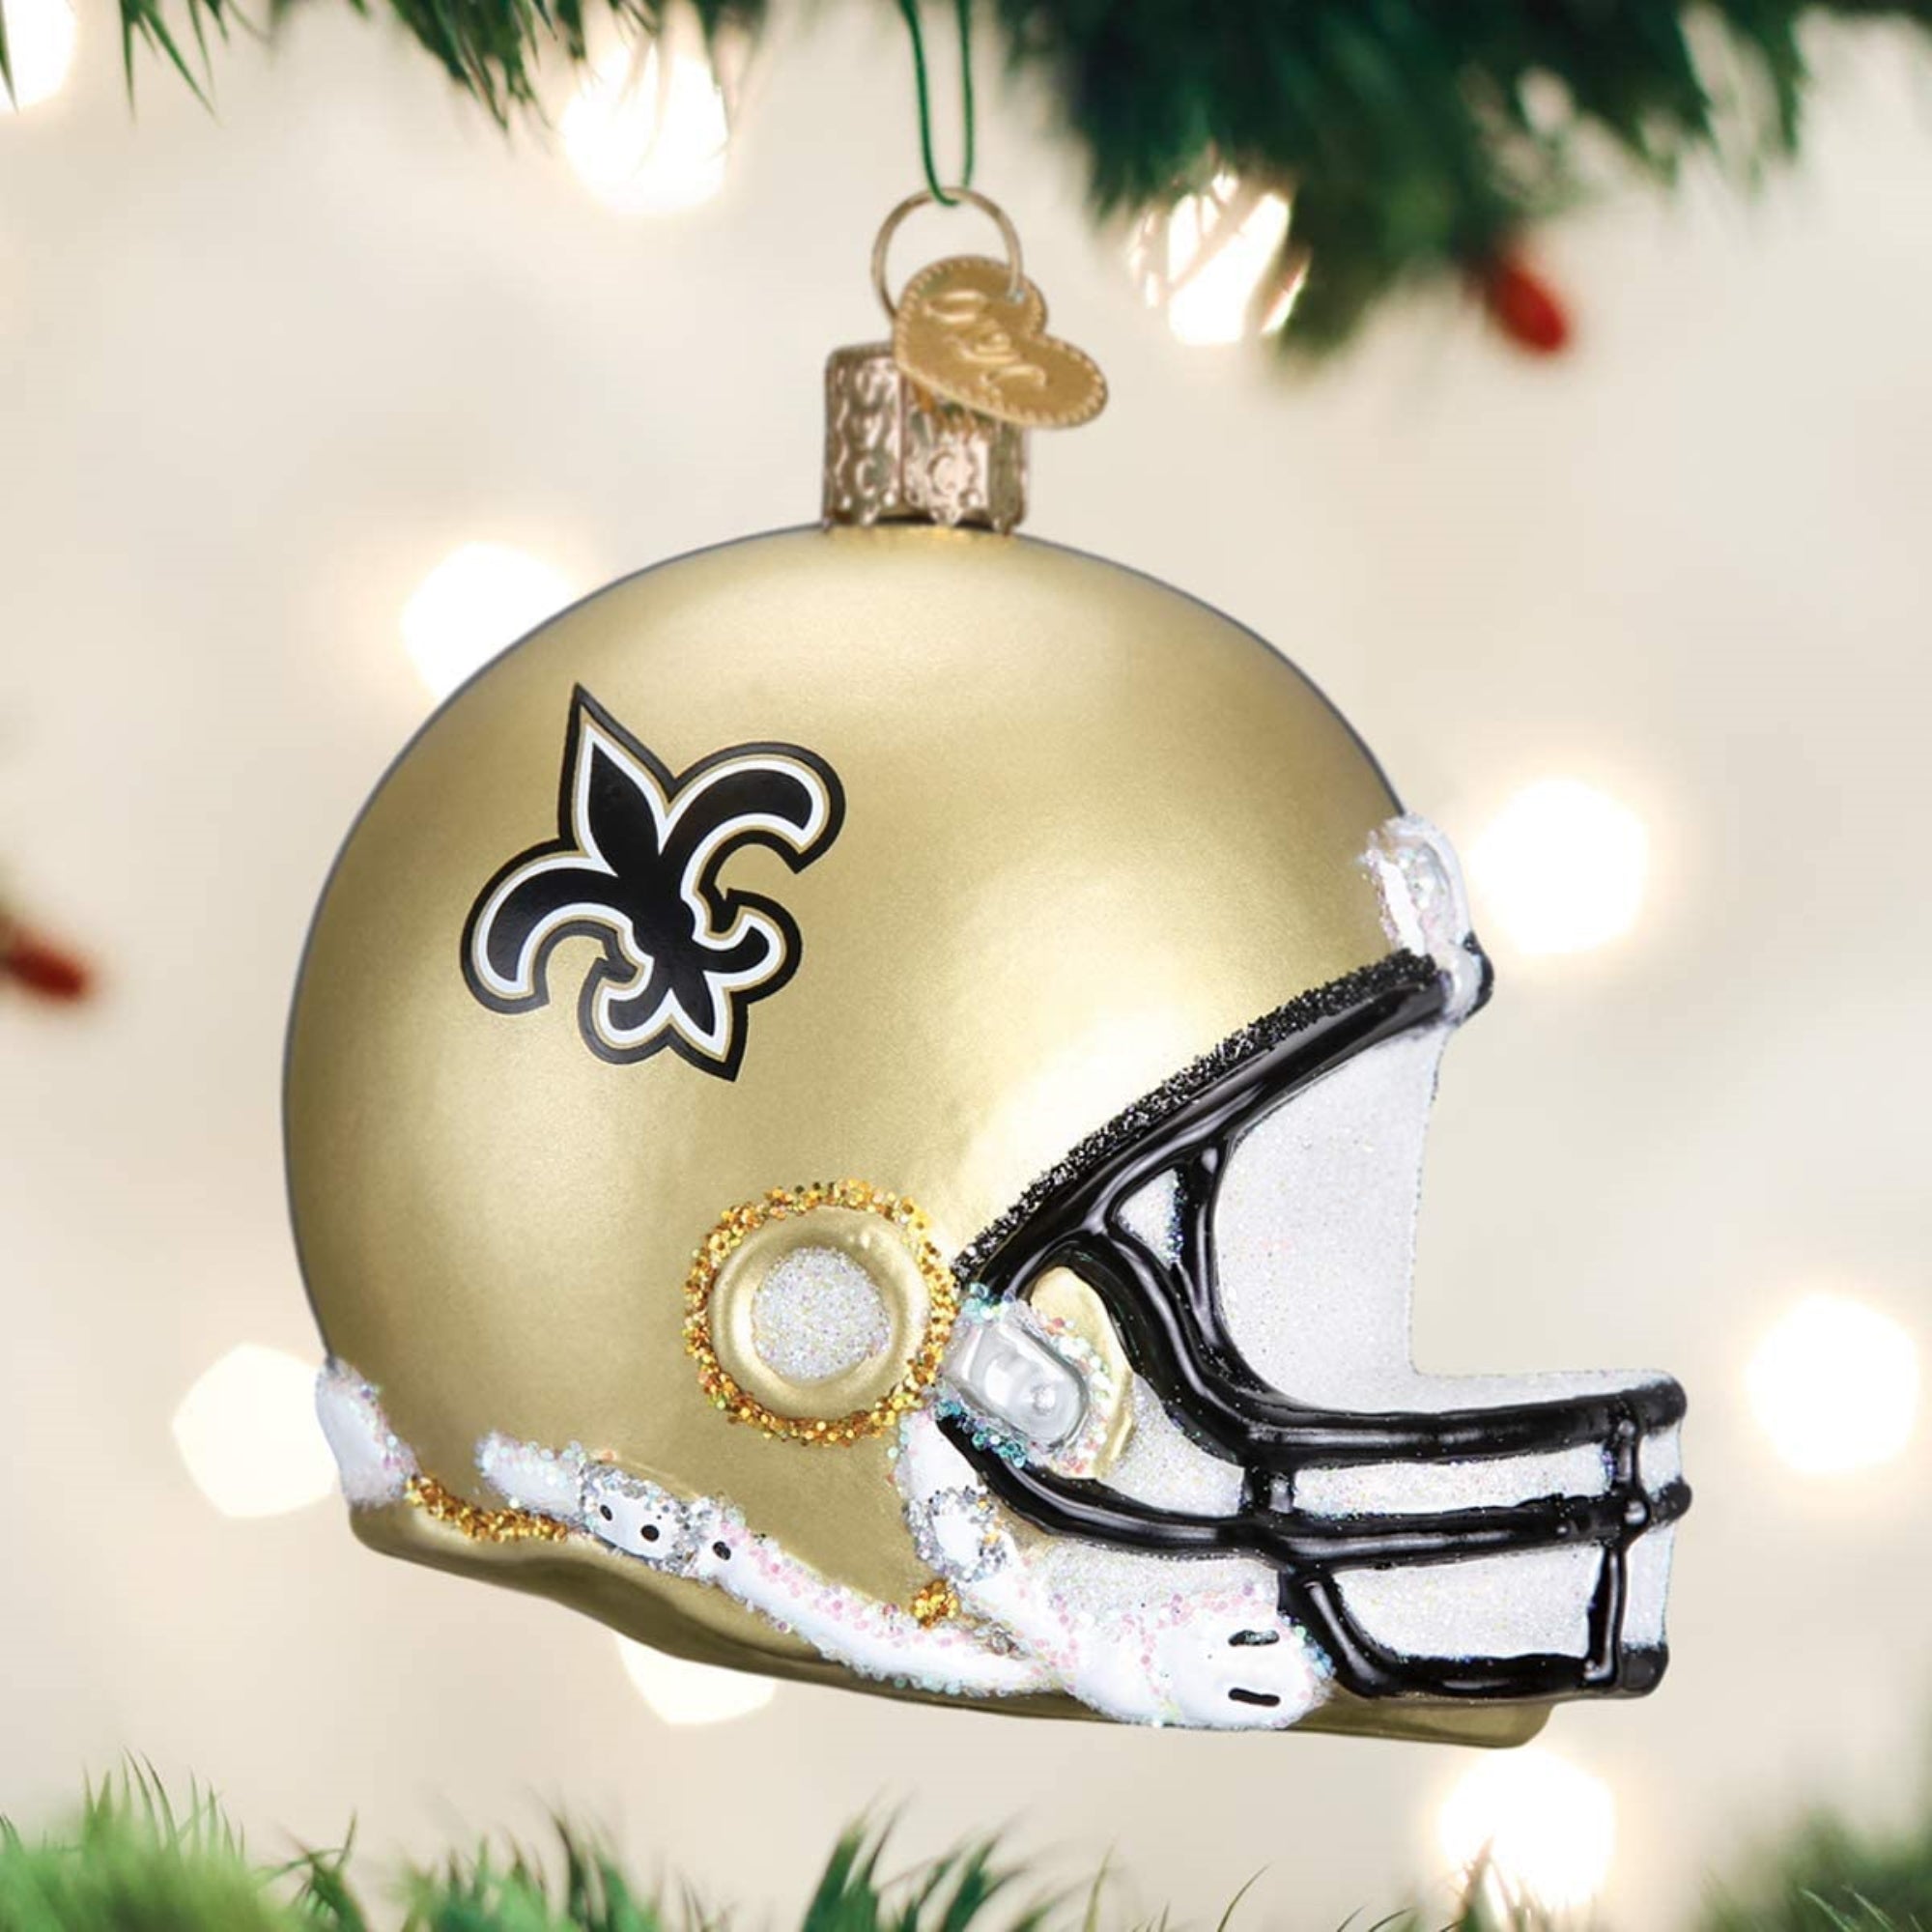 Old World Christmas New Orleans Saints Helmet Ornament For Christmas Tree